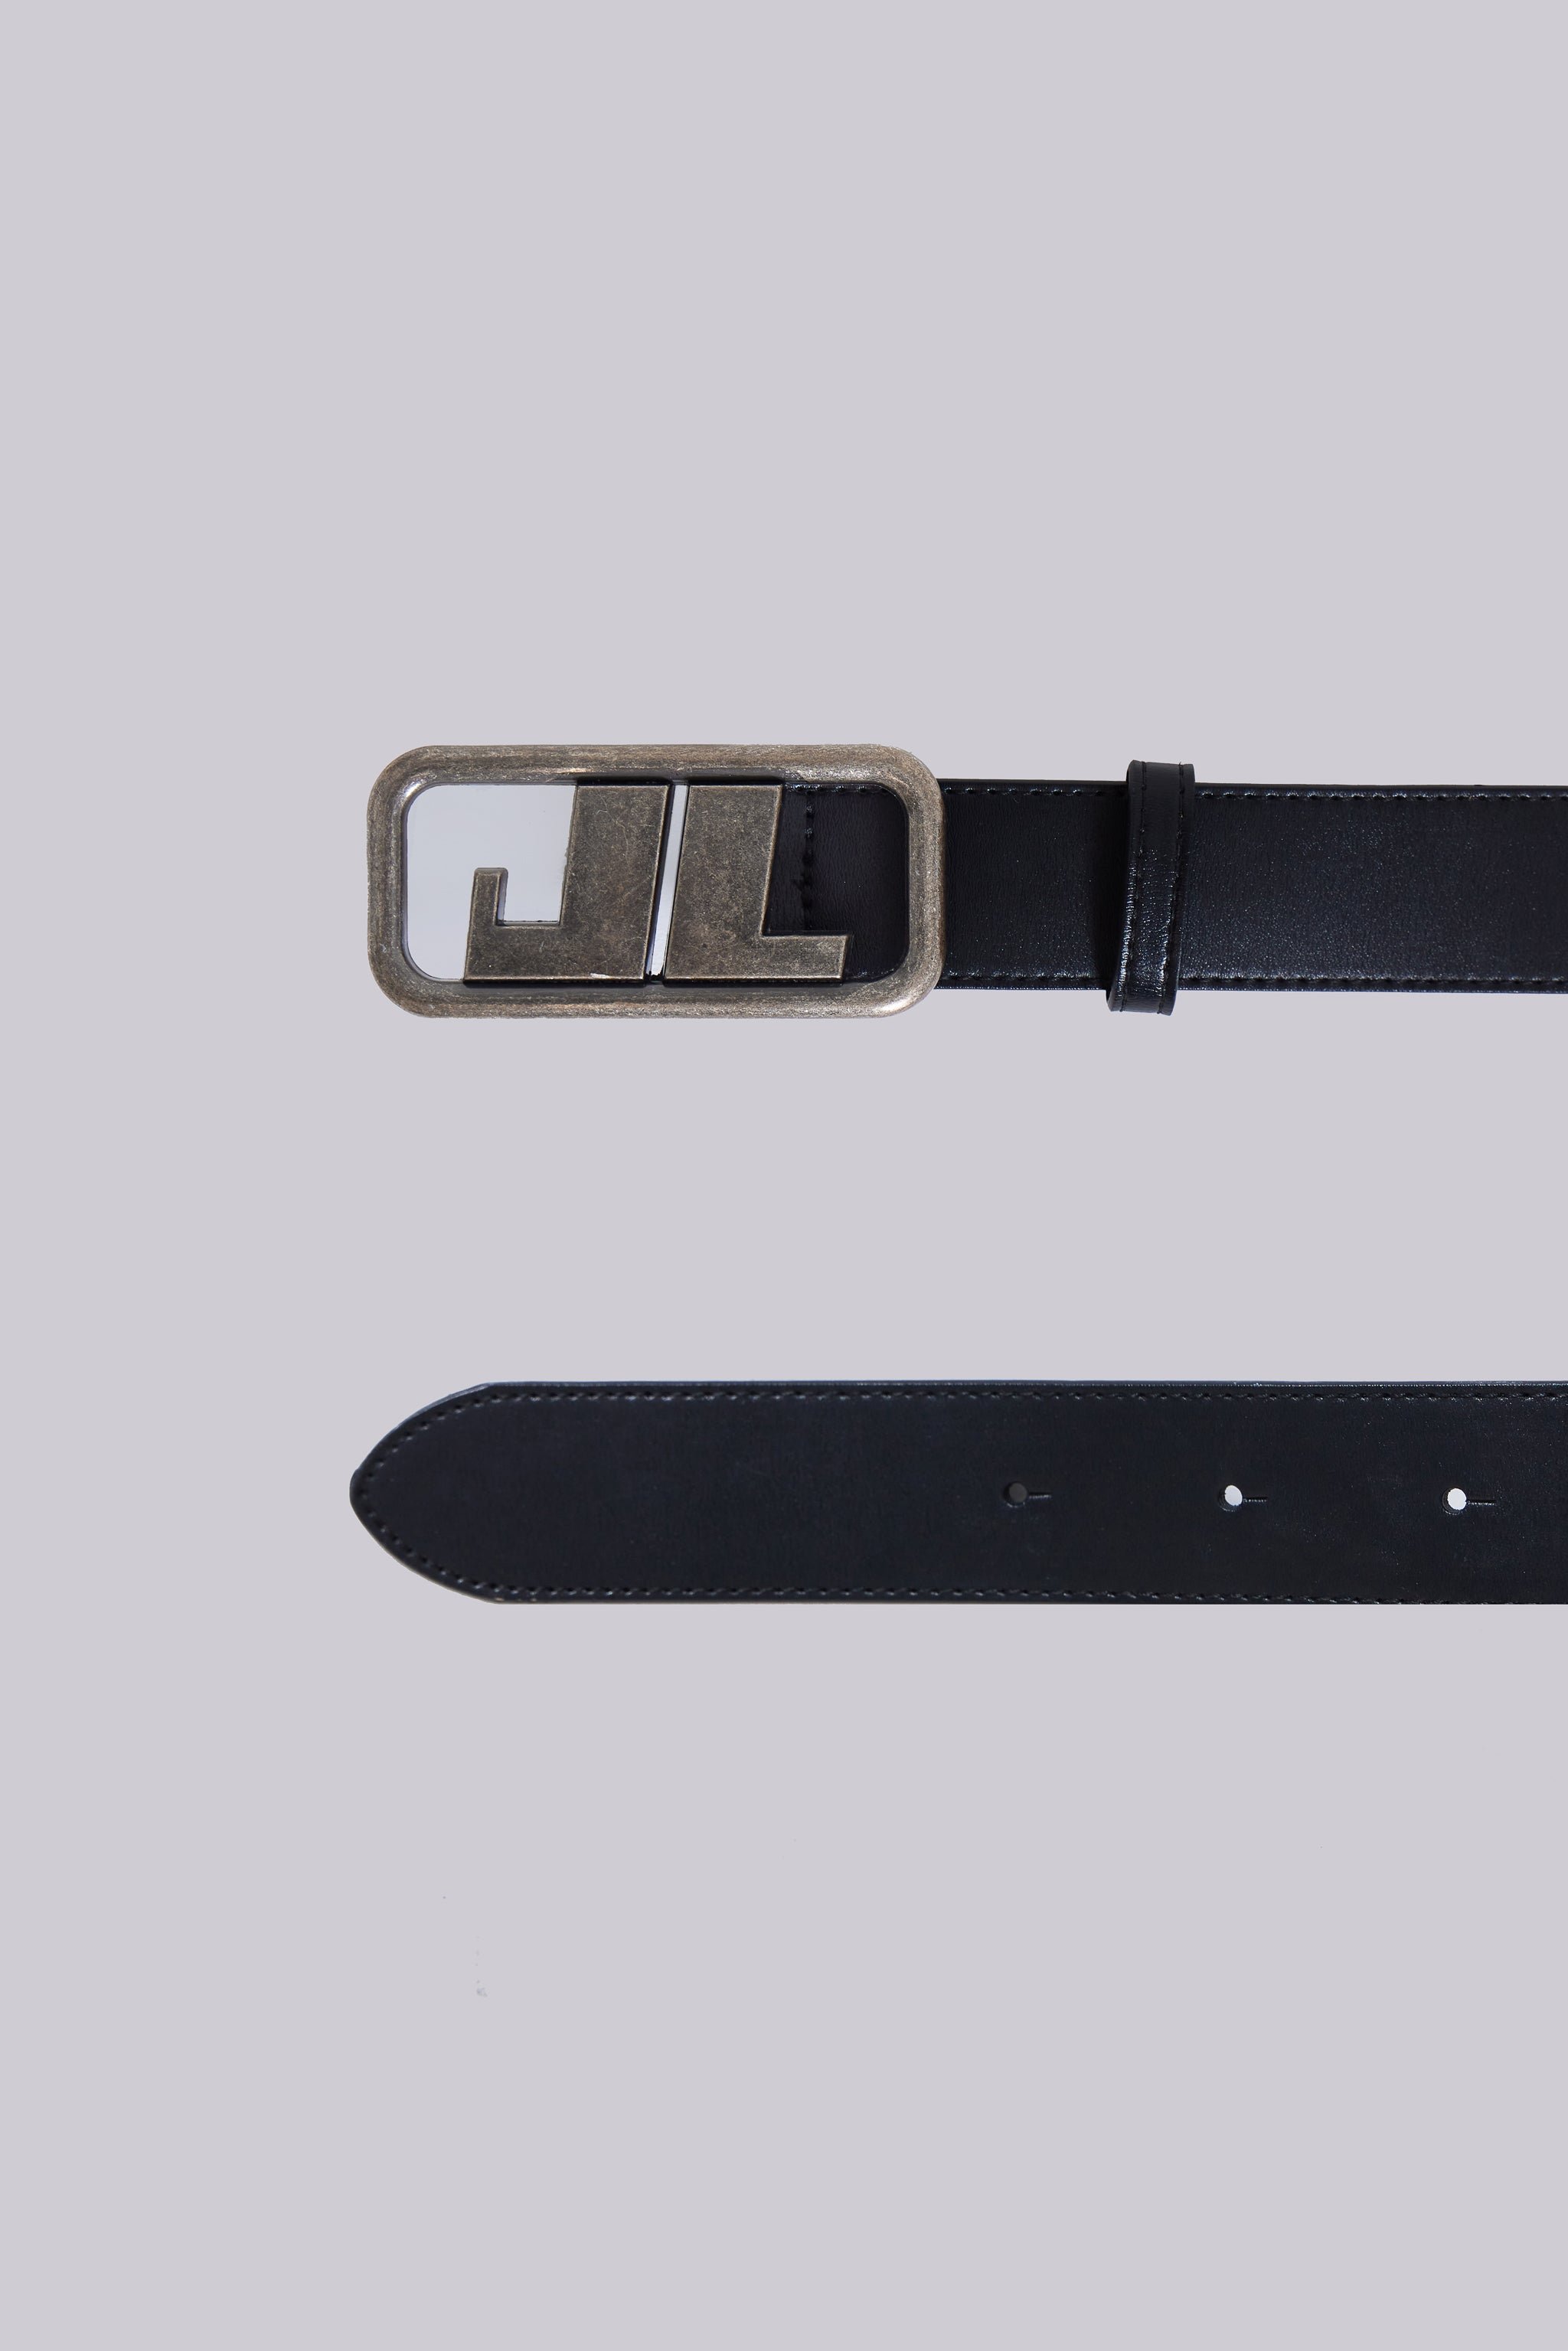 leather belt price